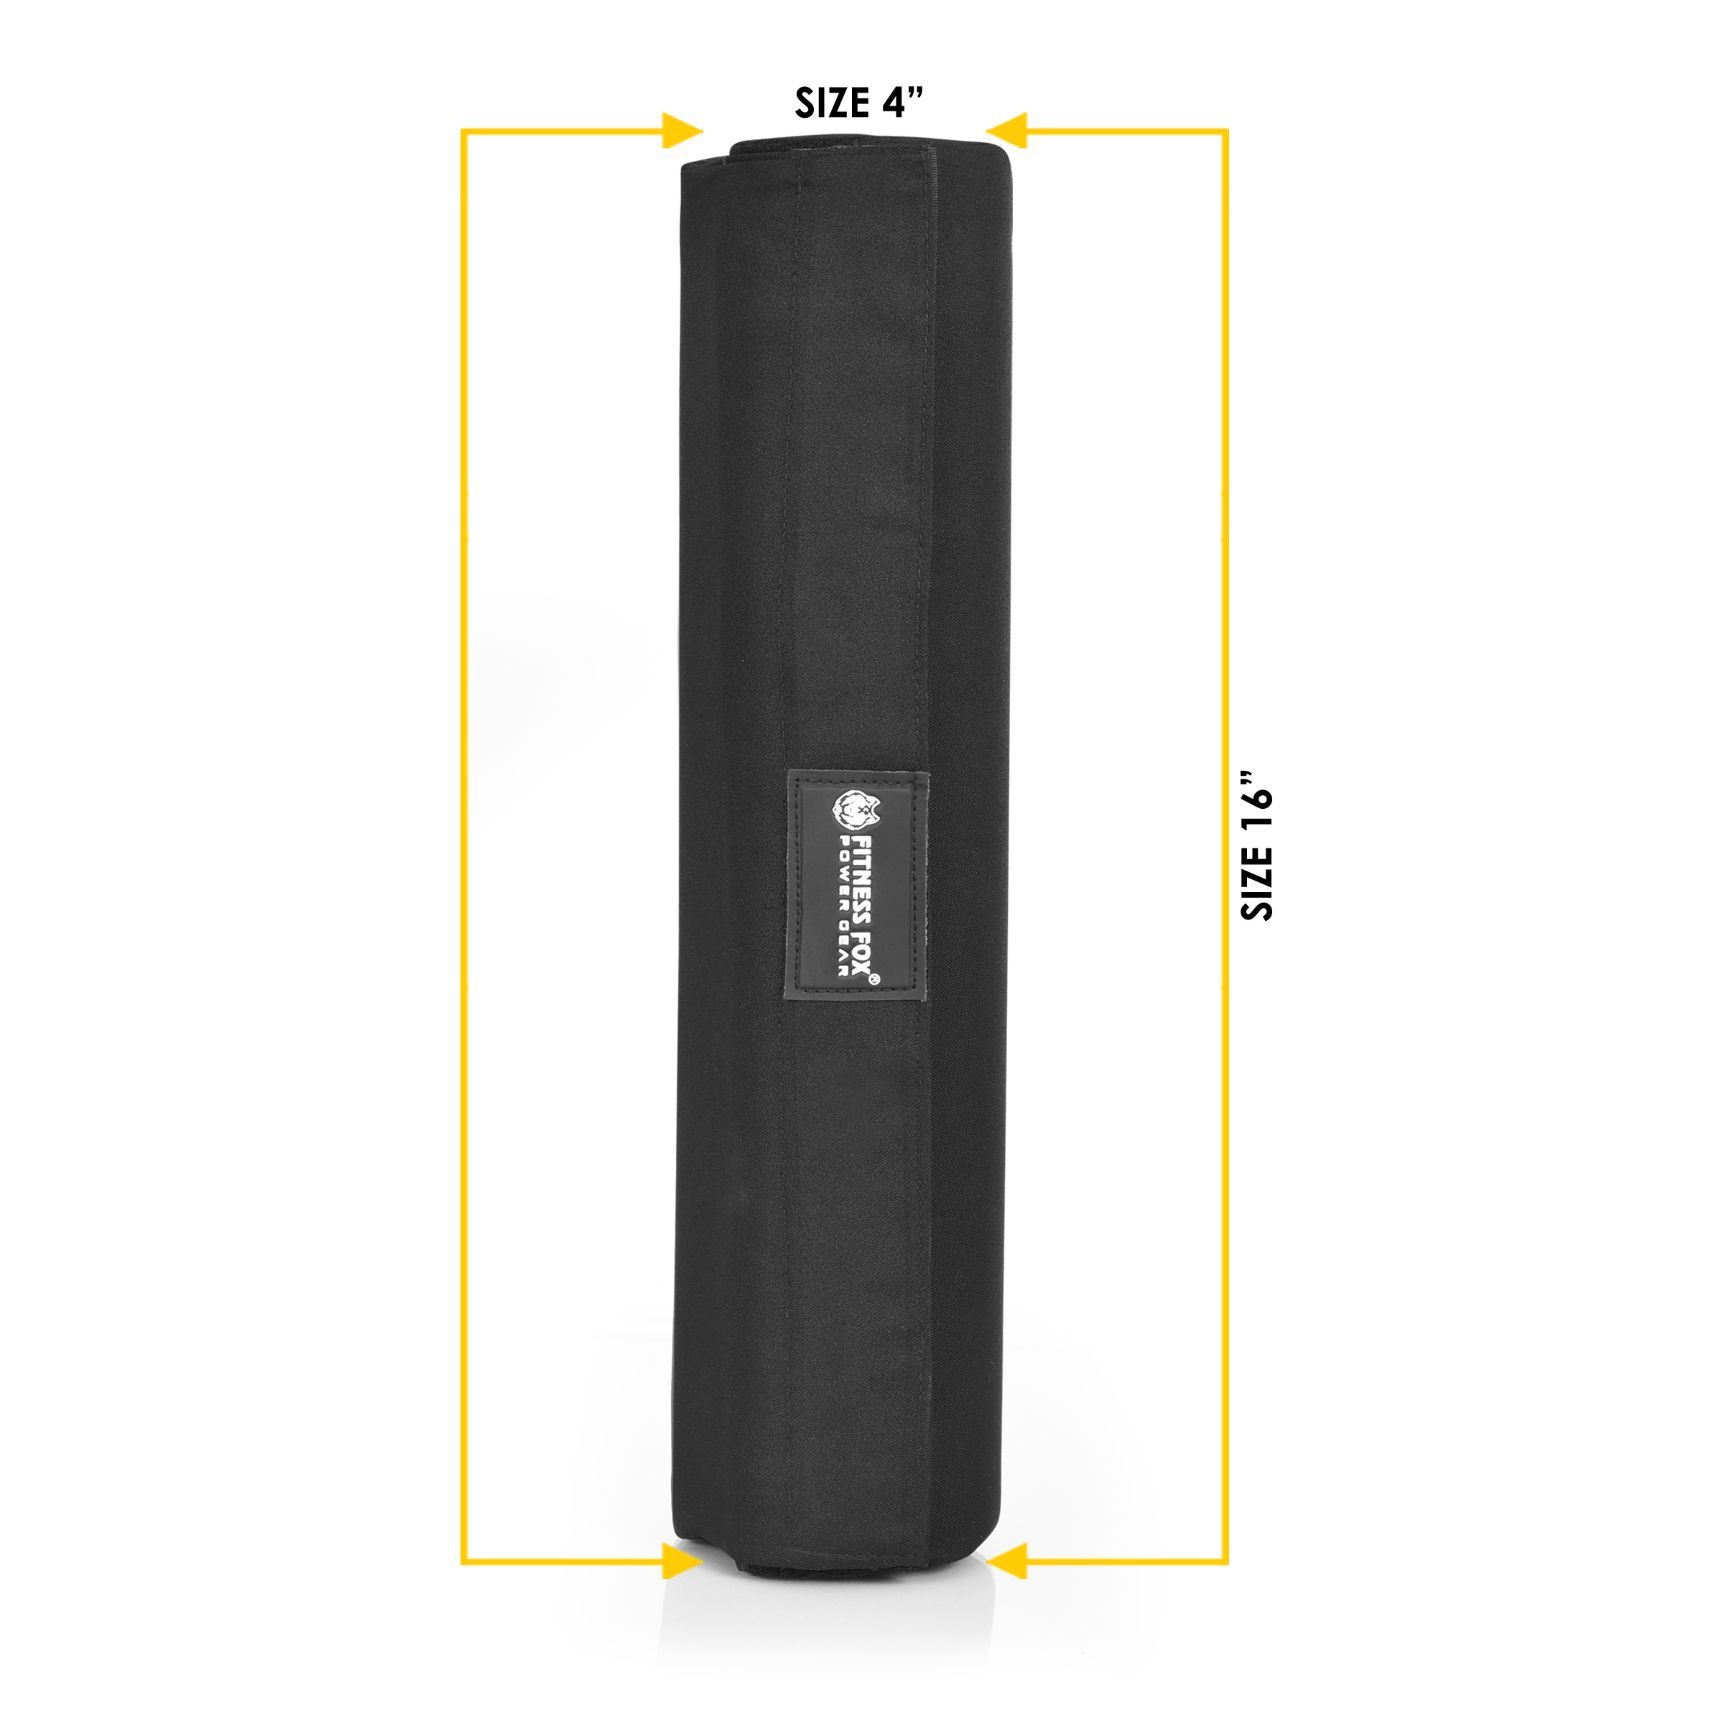 Weightlifting Barbell Squat Pad (Black)